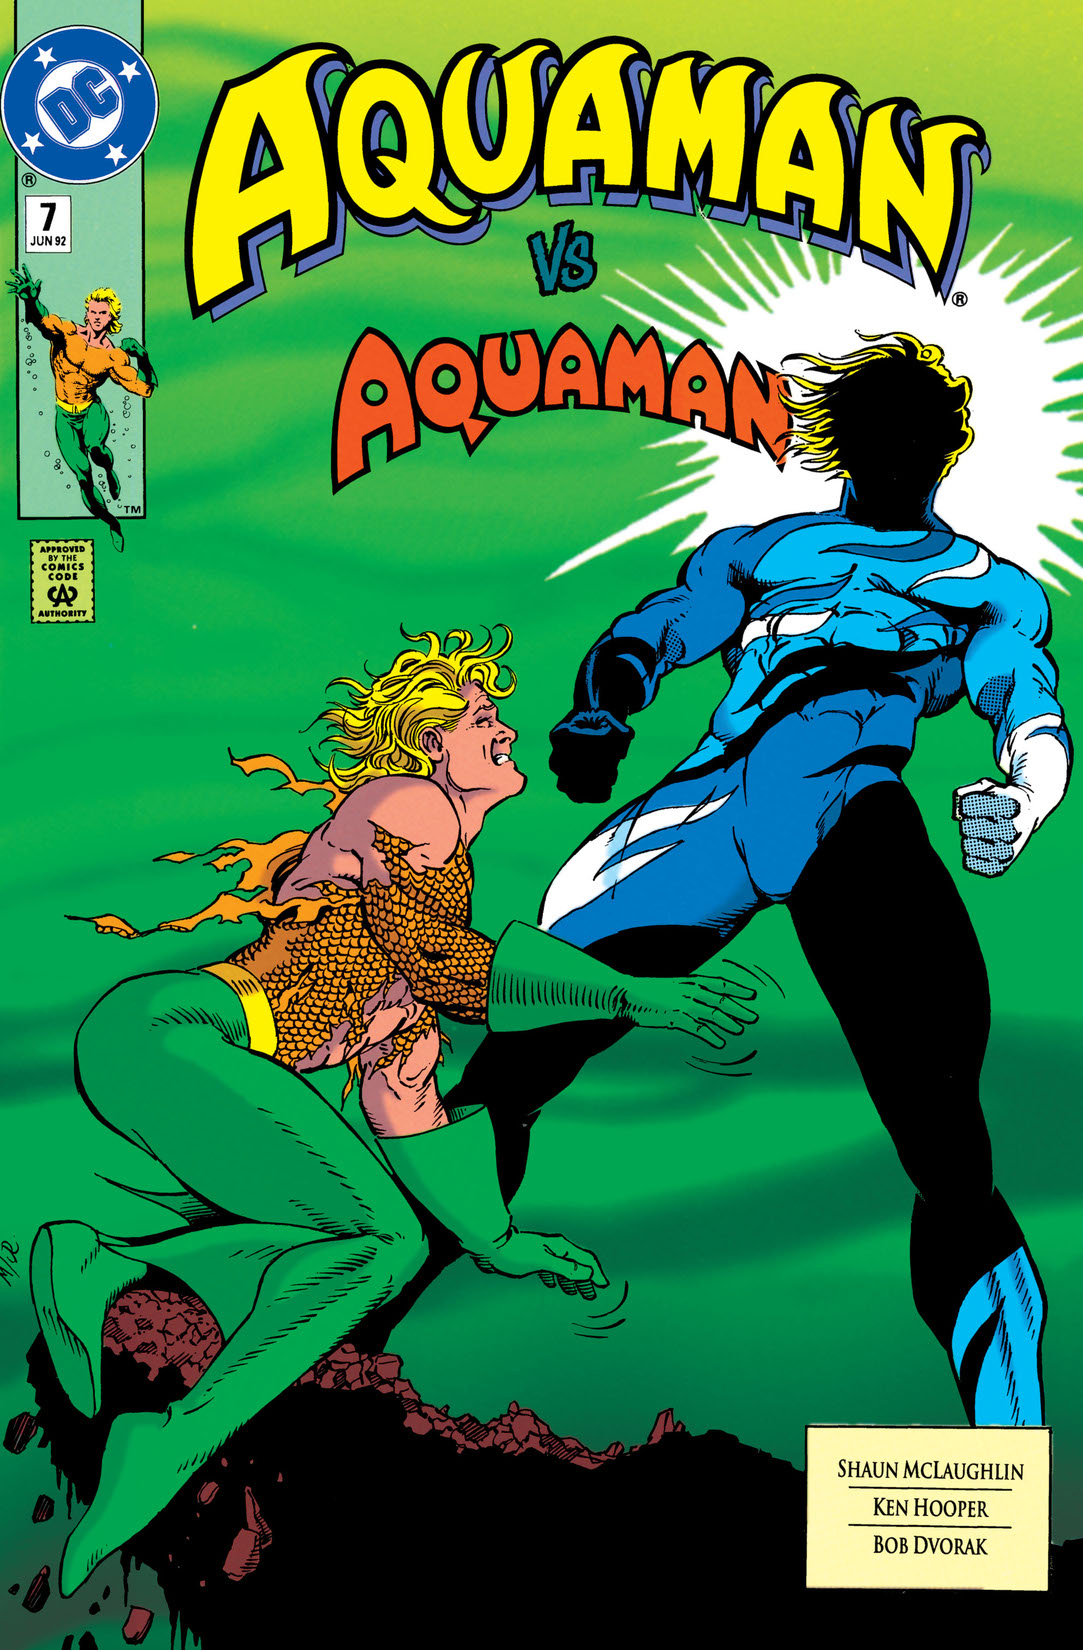 Aquaman (1991-) #7 preview images